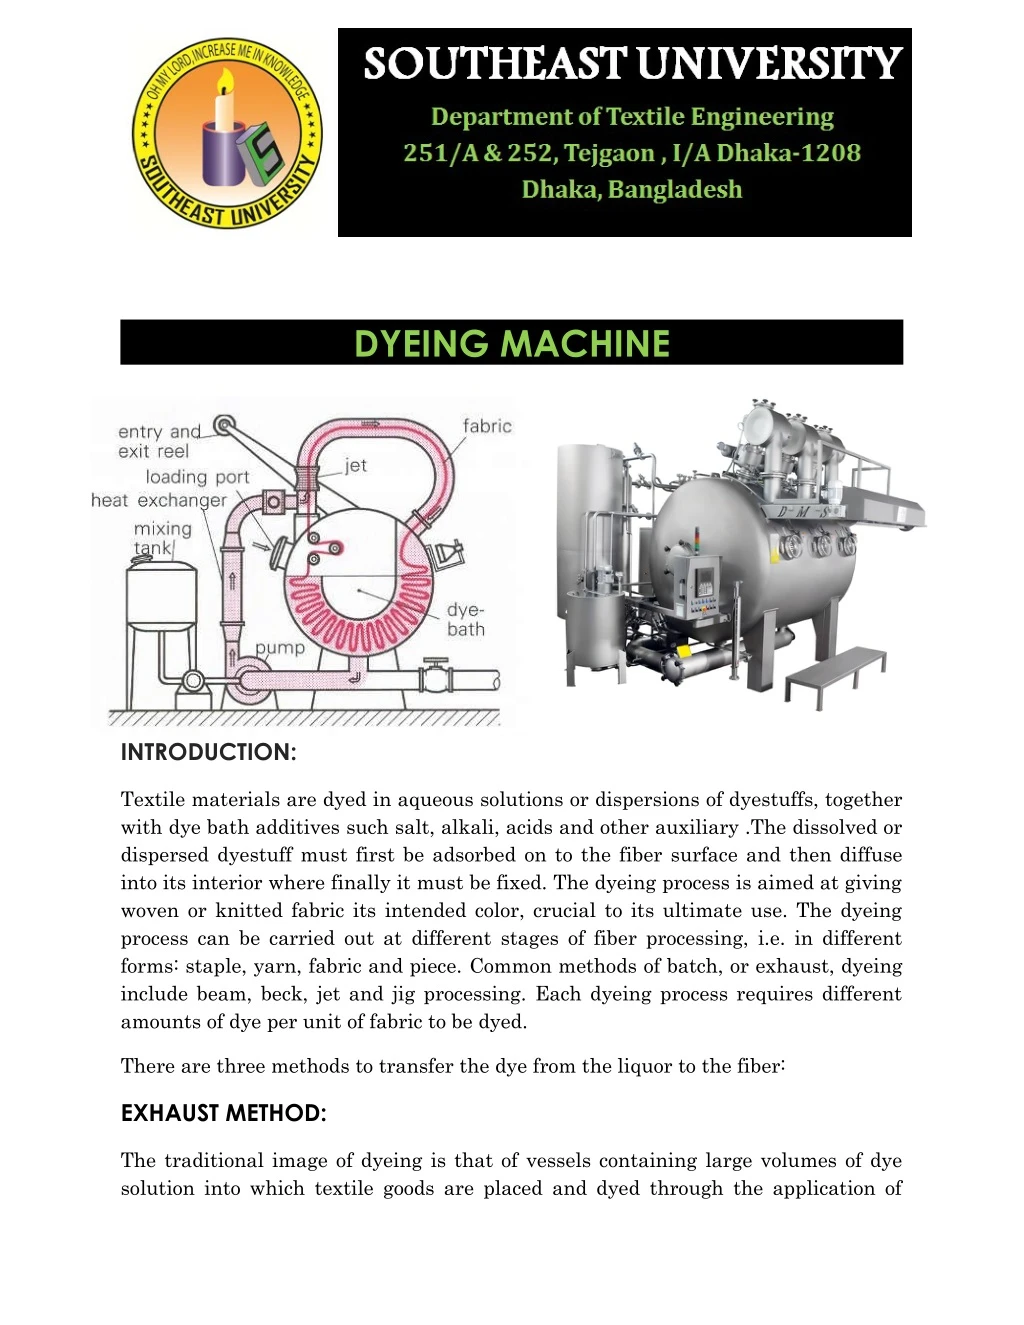 dyeing machine